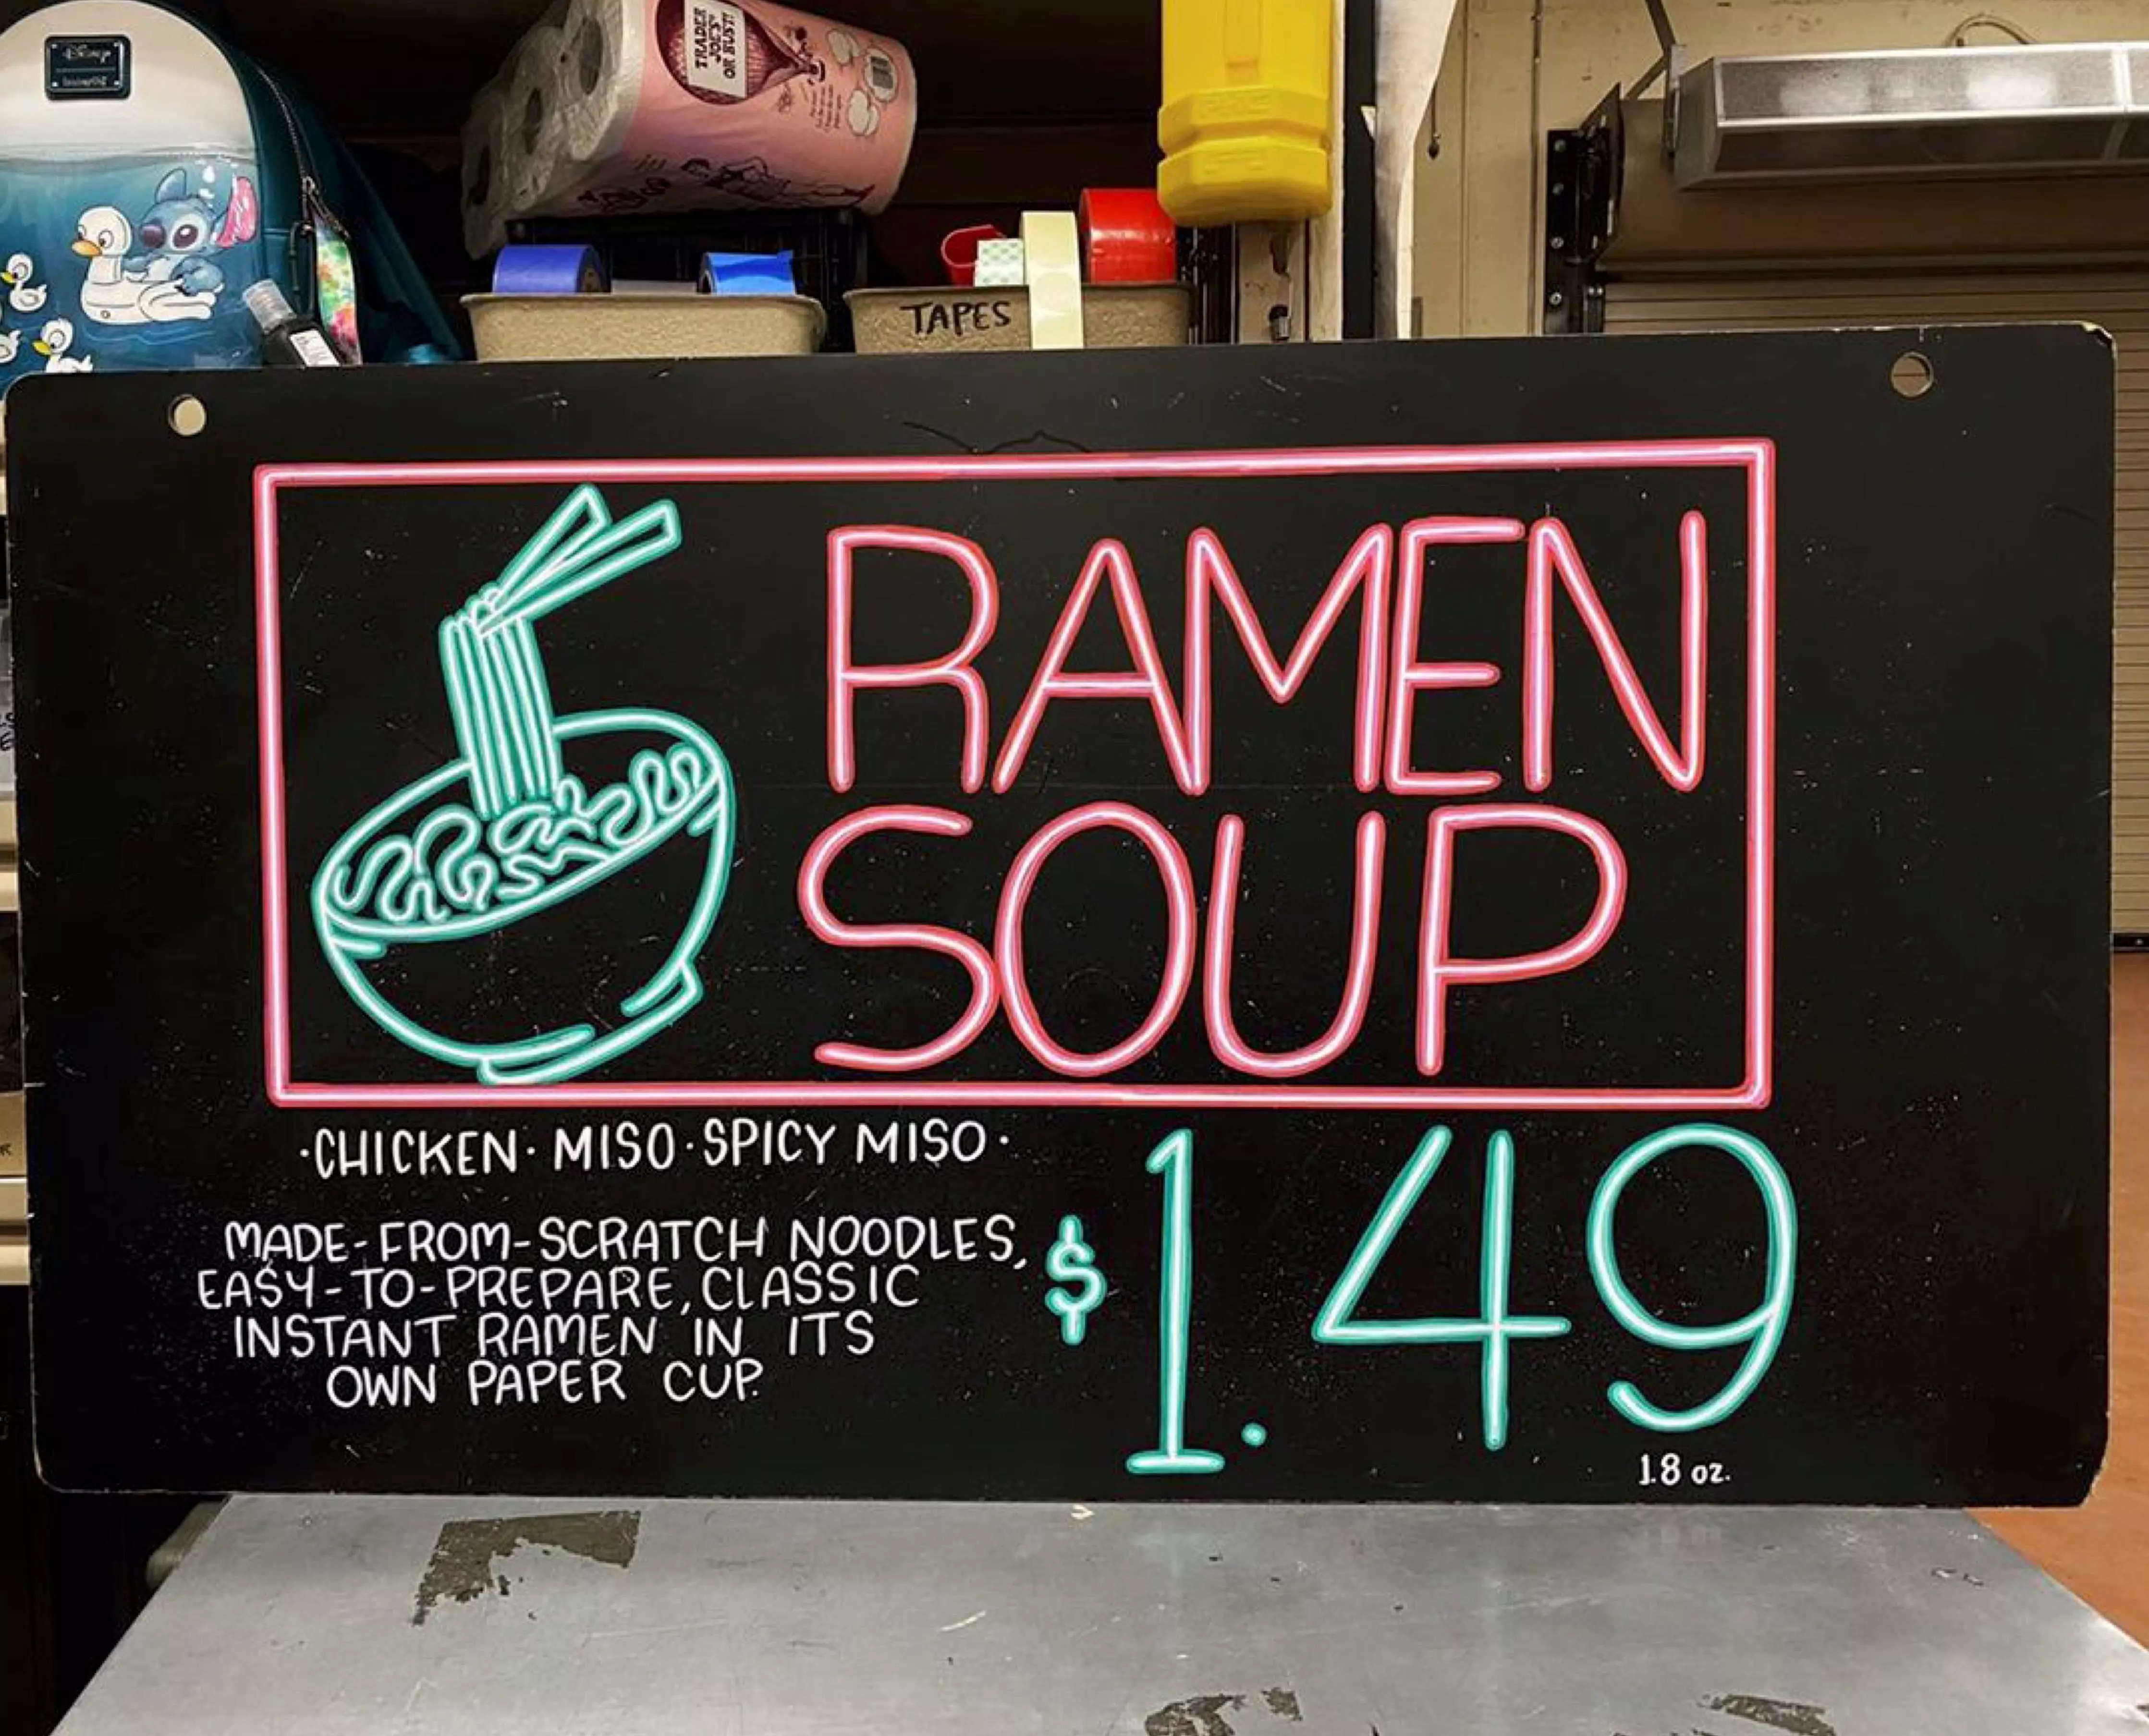 A ramen soup advertisement board.